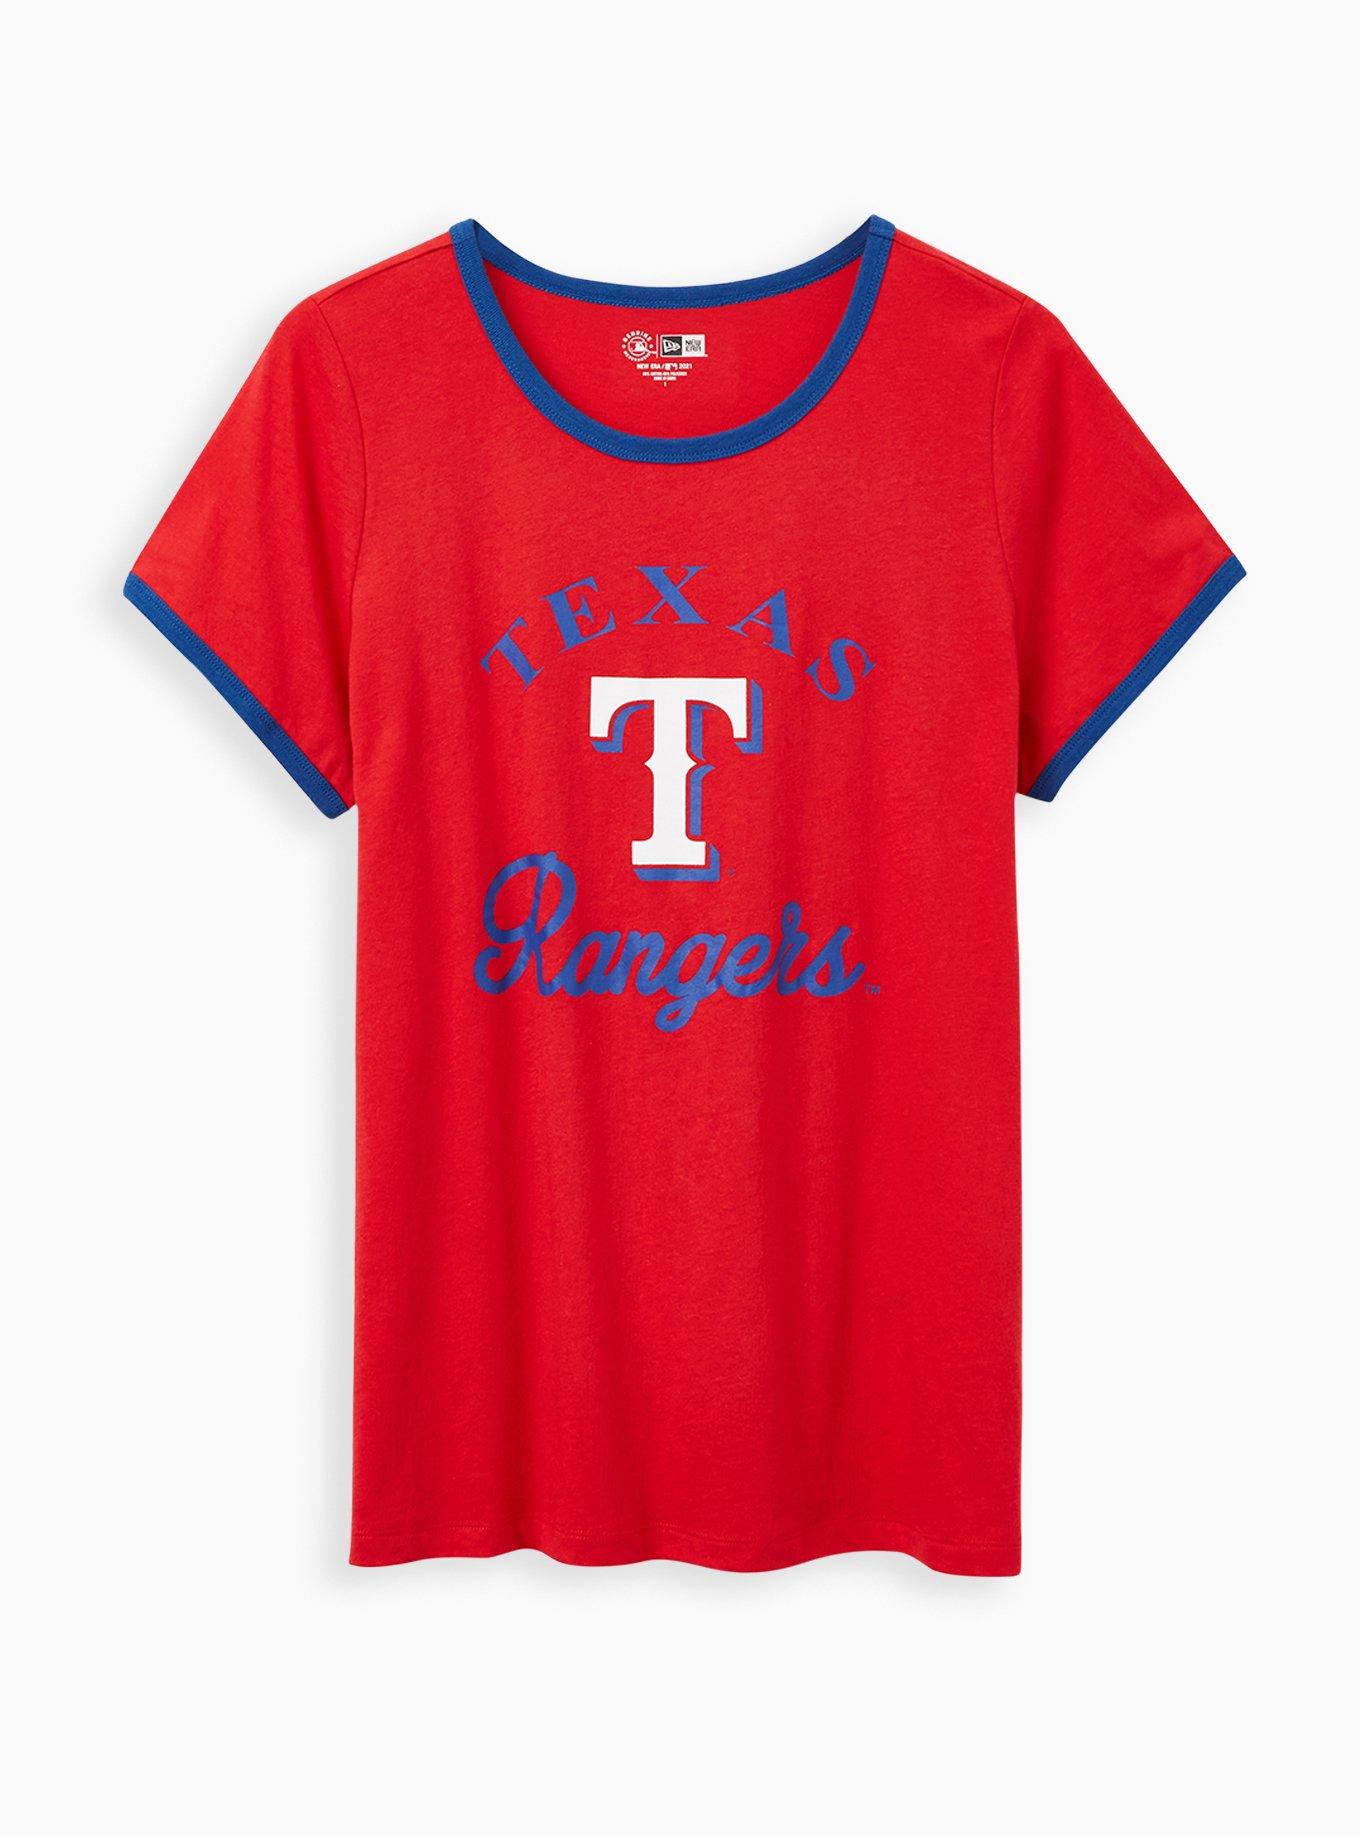 Plus Size - Classic Fit Ringer Tee - MLB Texas Rangers Red - Torrid